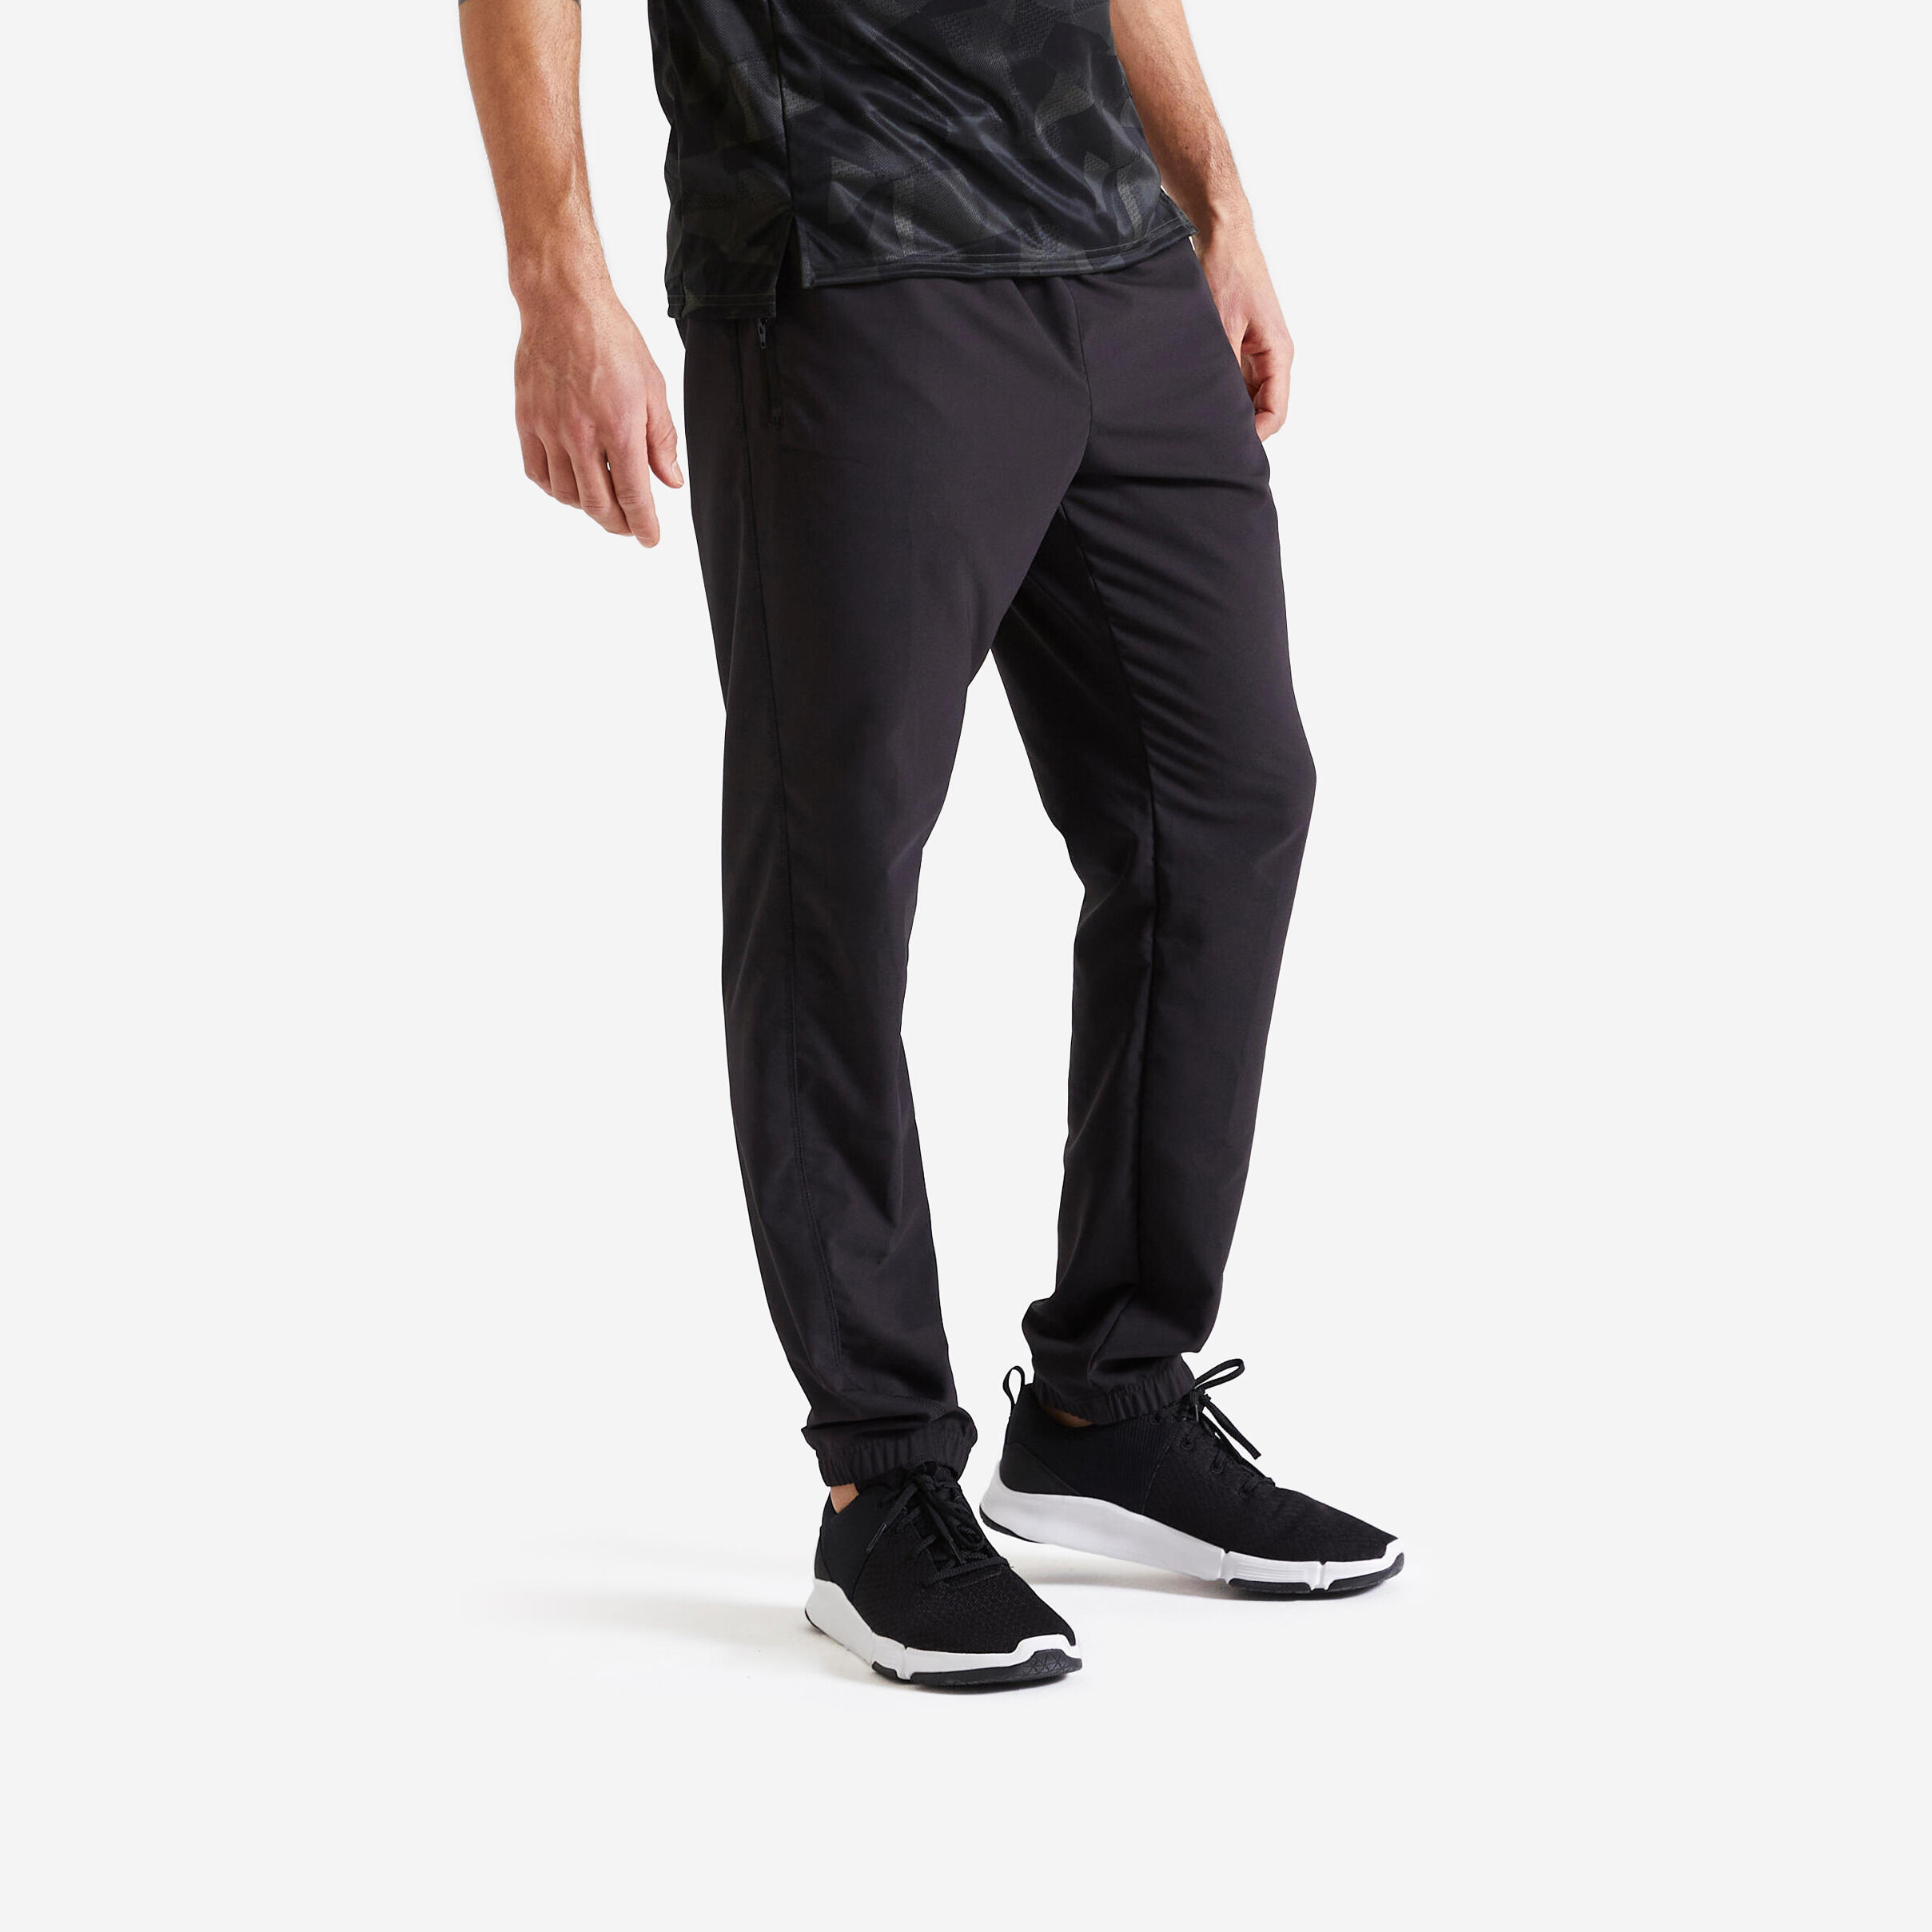 Men's Running Pants - Warm 100 Black